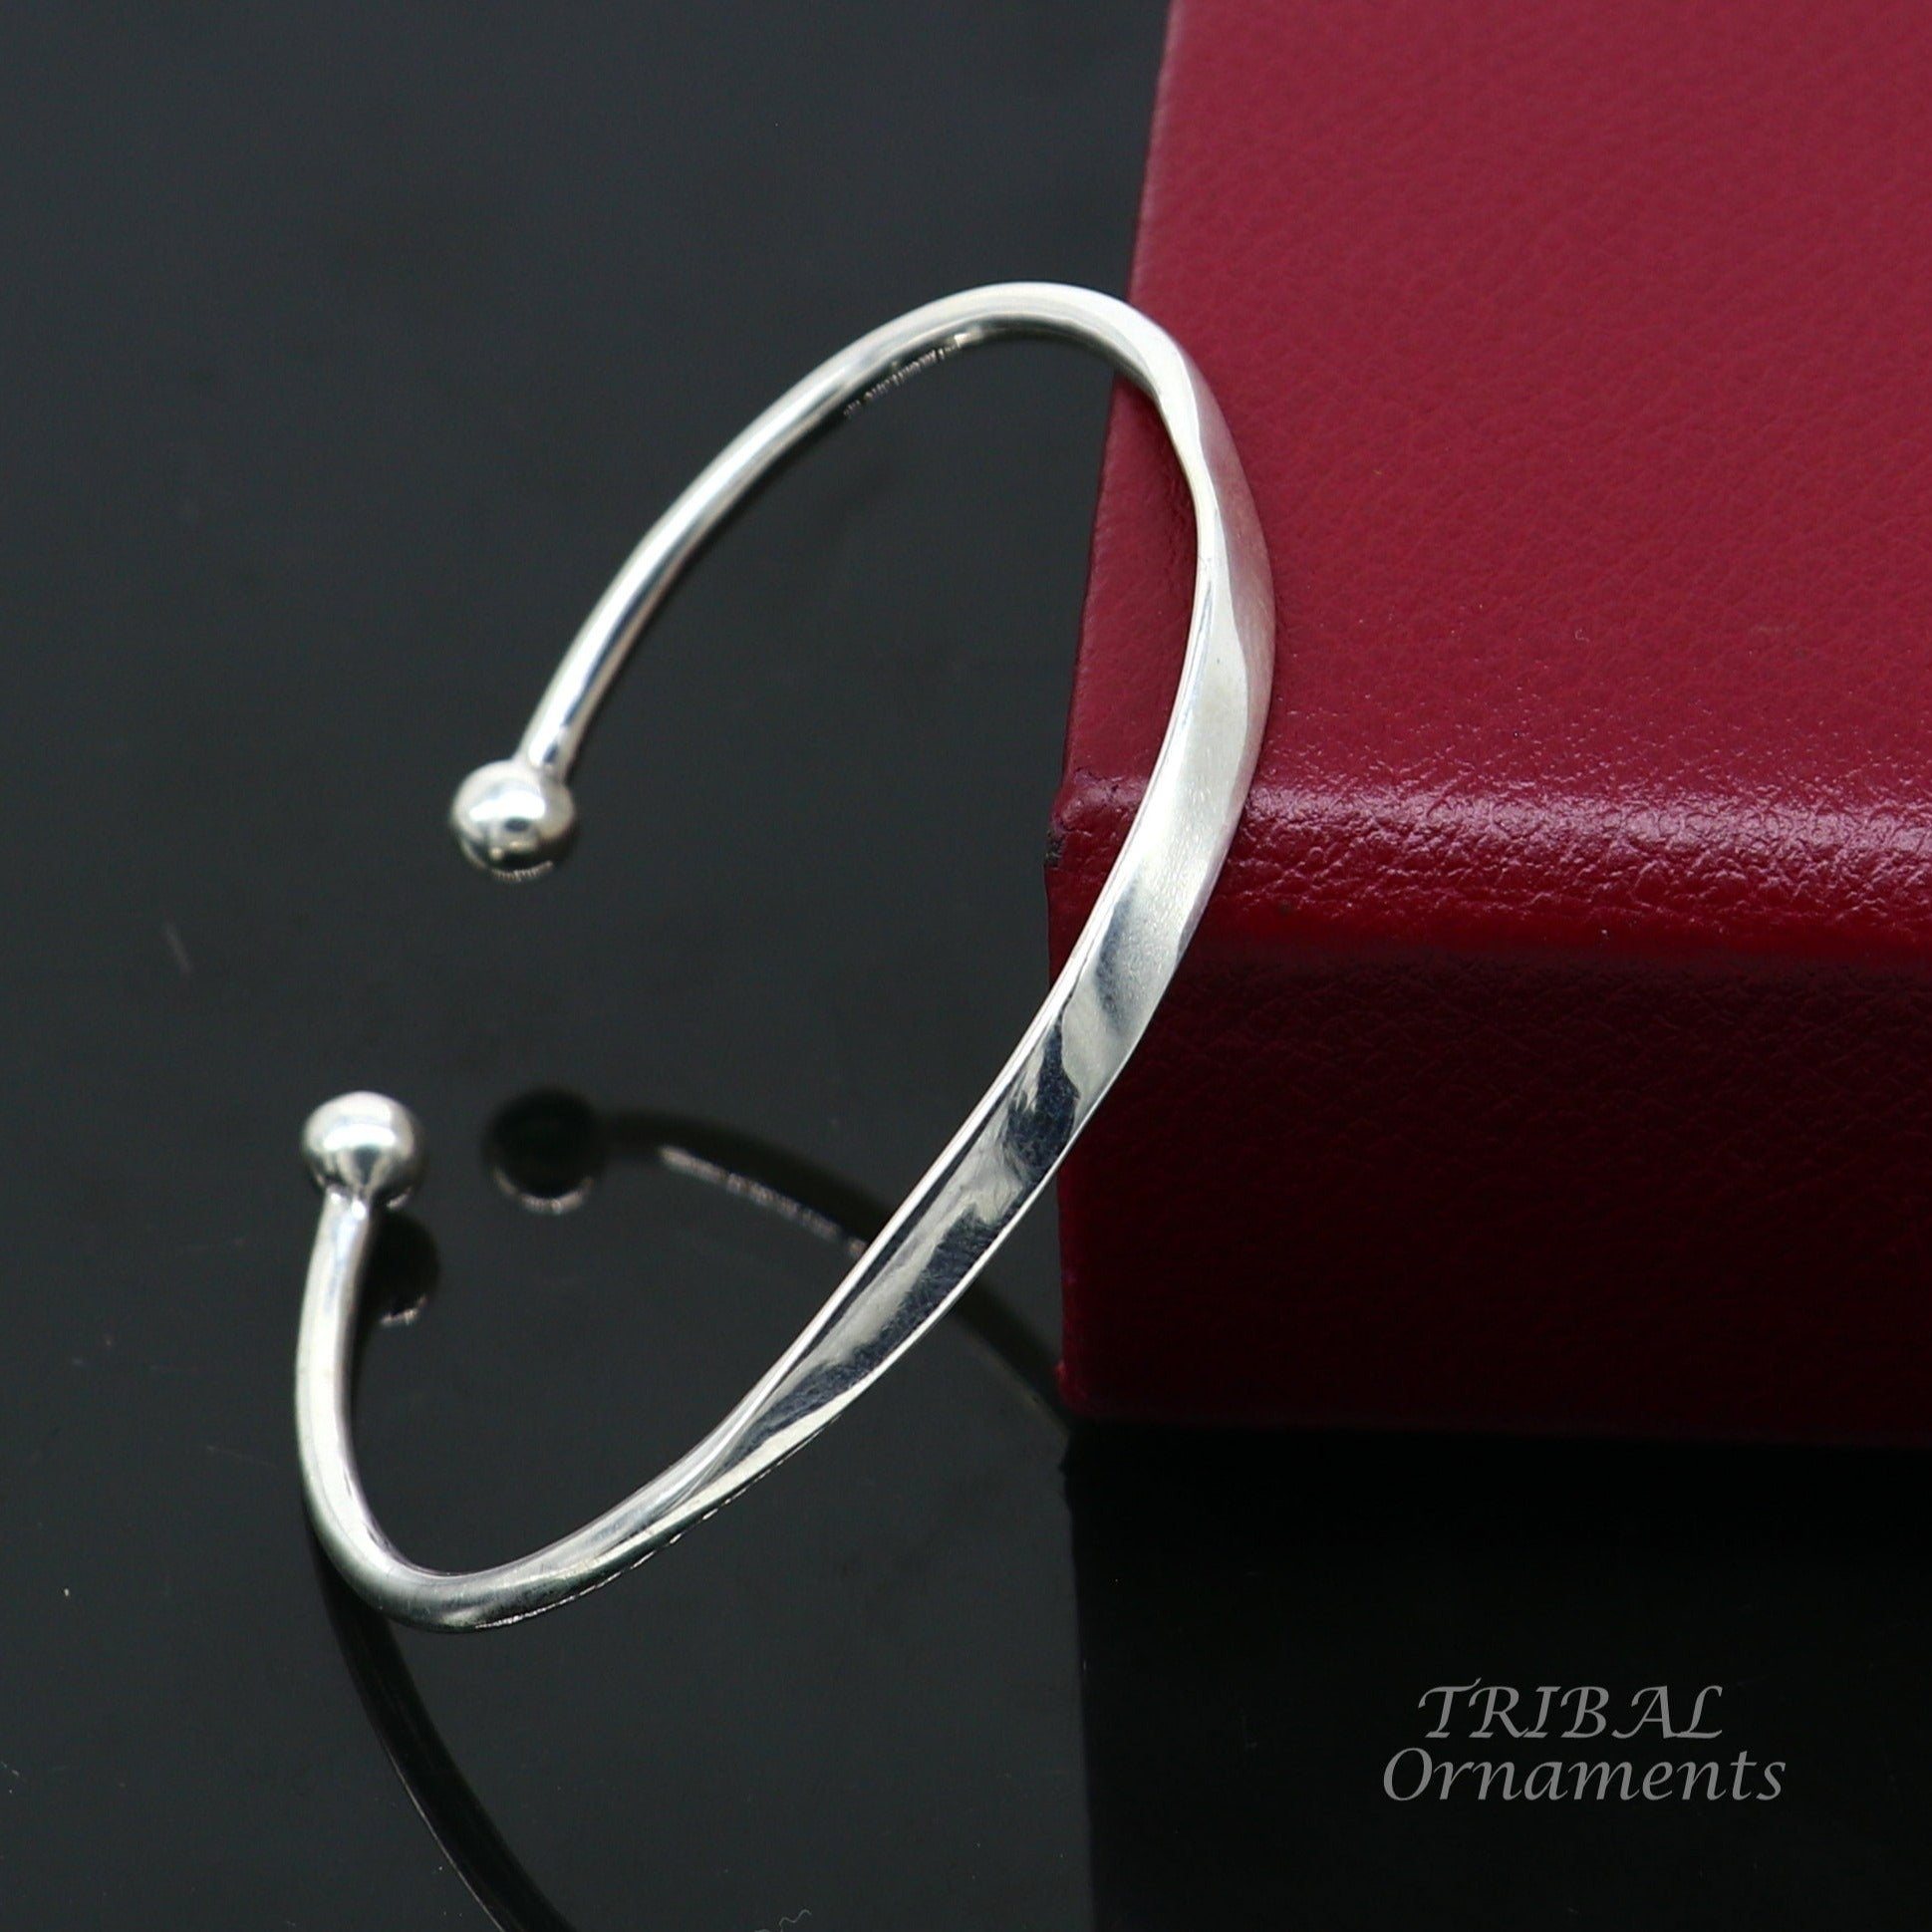 925 sterling silver handmade plain shiny design bangle bracelet cuff kada, excellent gifting plain bracelet stylish gifting kada cuff109 - TRIBAL ORNAMENTS